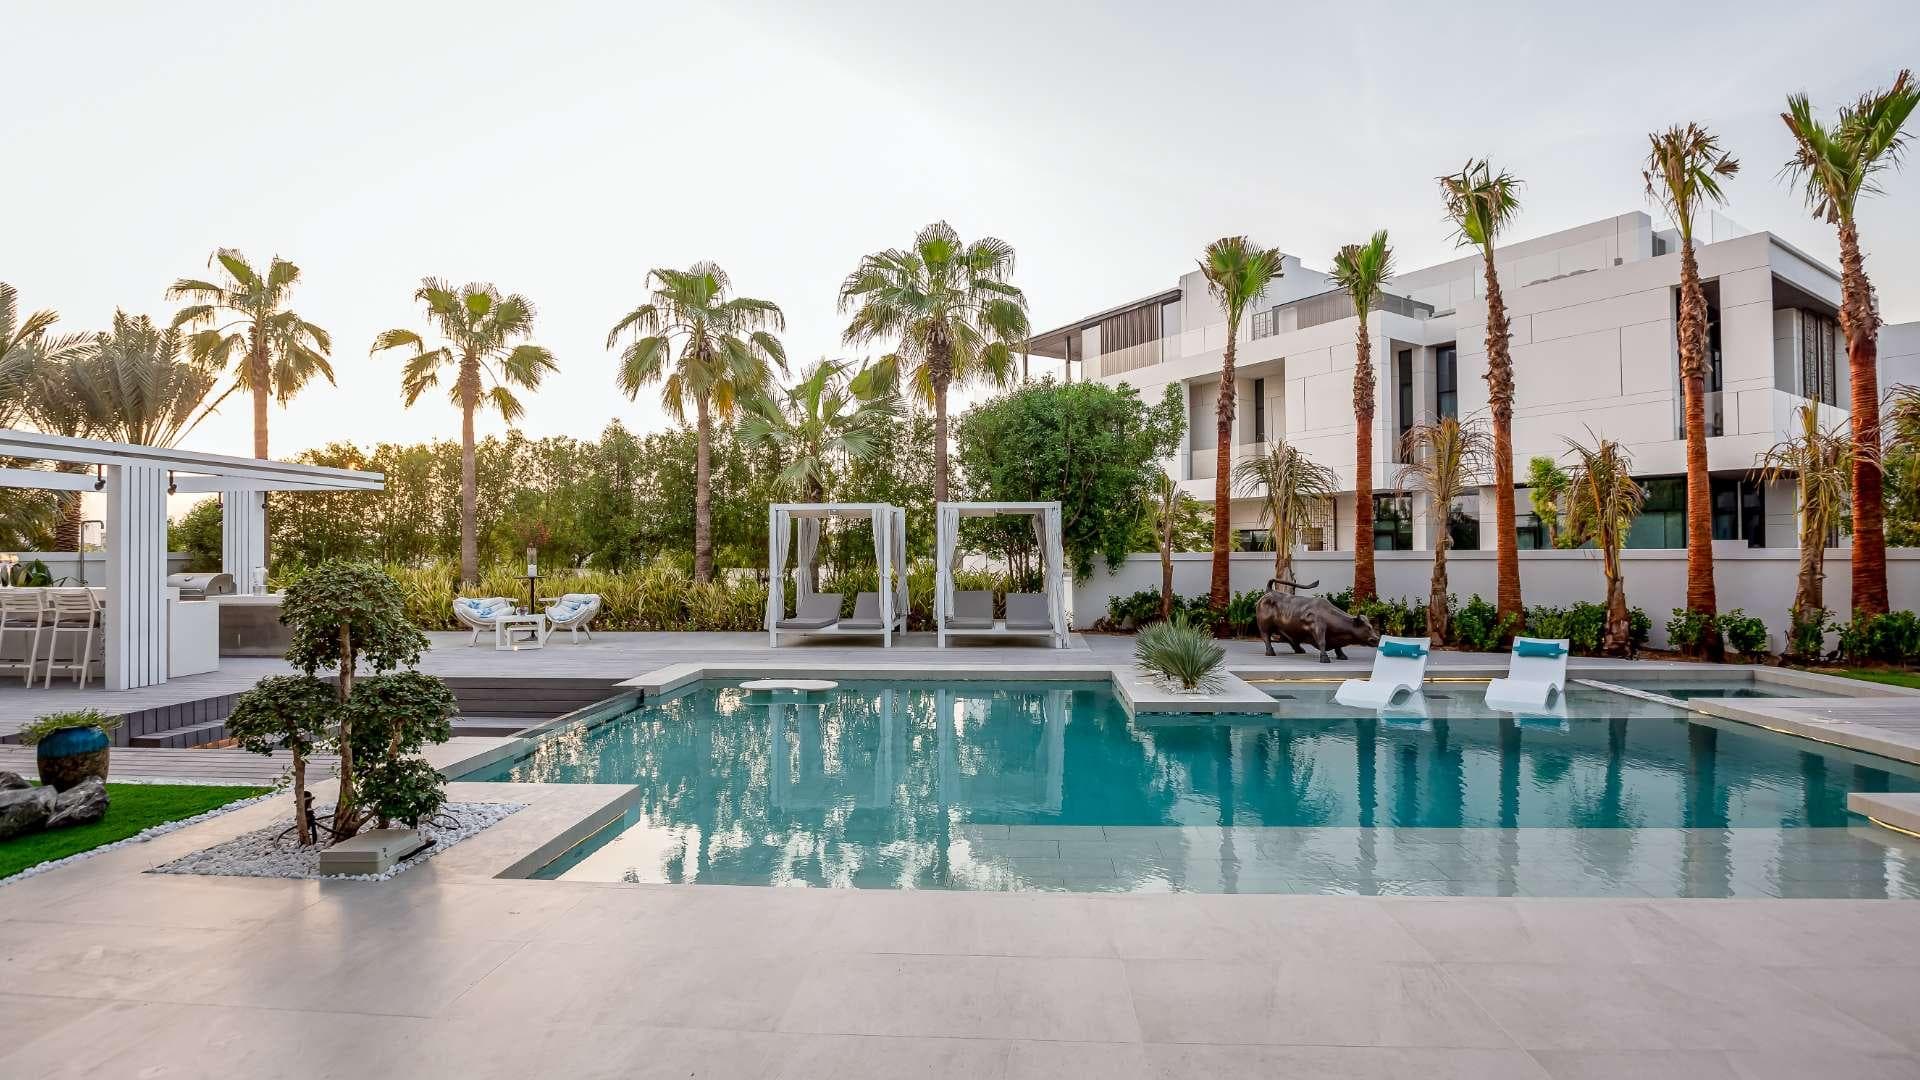 7 Bedroom Villa For Sale Dubai Hills View Lp18685 283f35e1c8261000.jpg